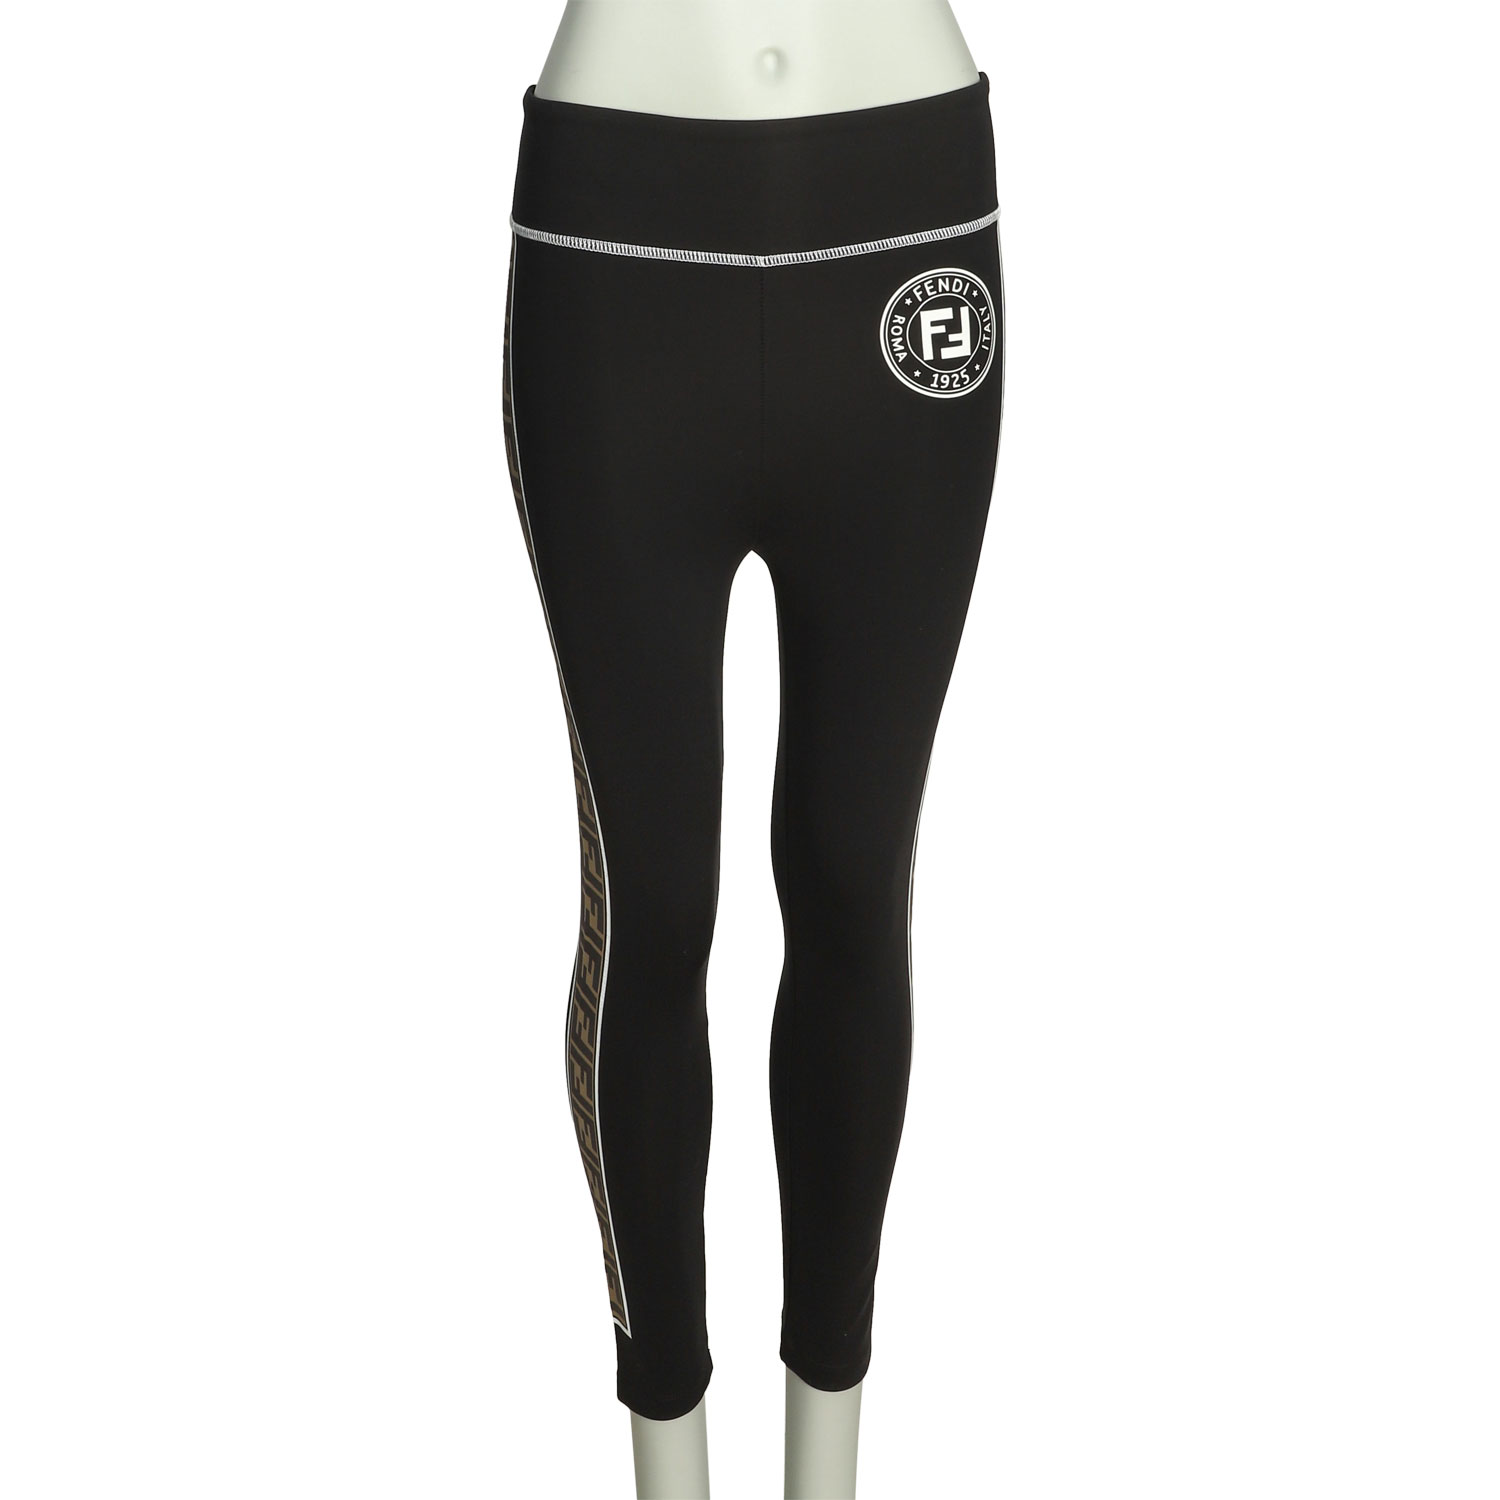 EPPLI, FENDI leggings, size 38.